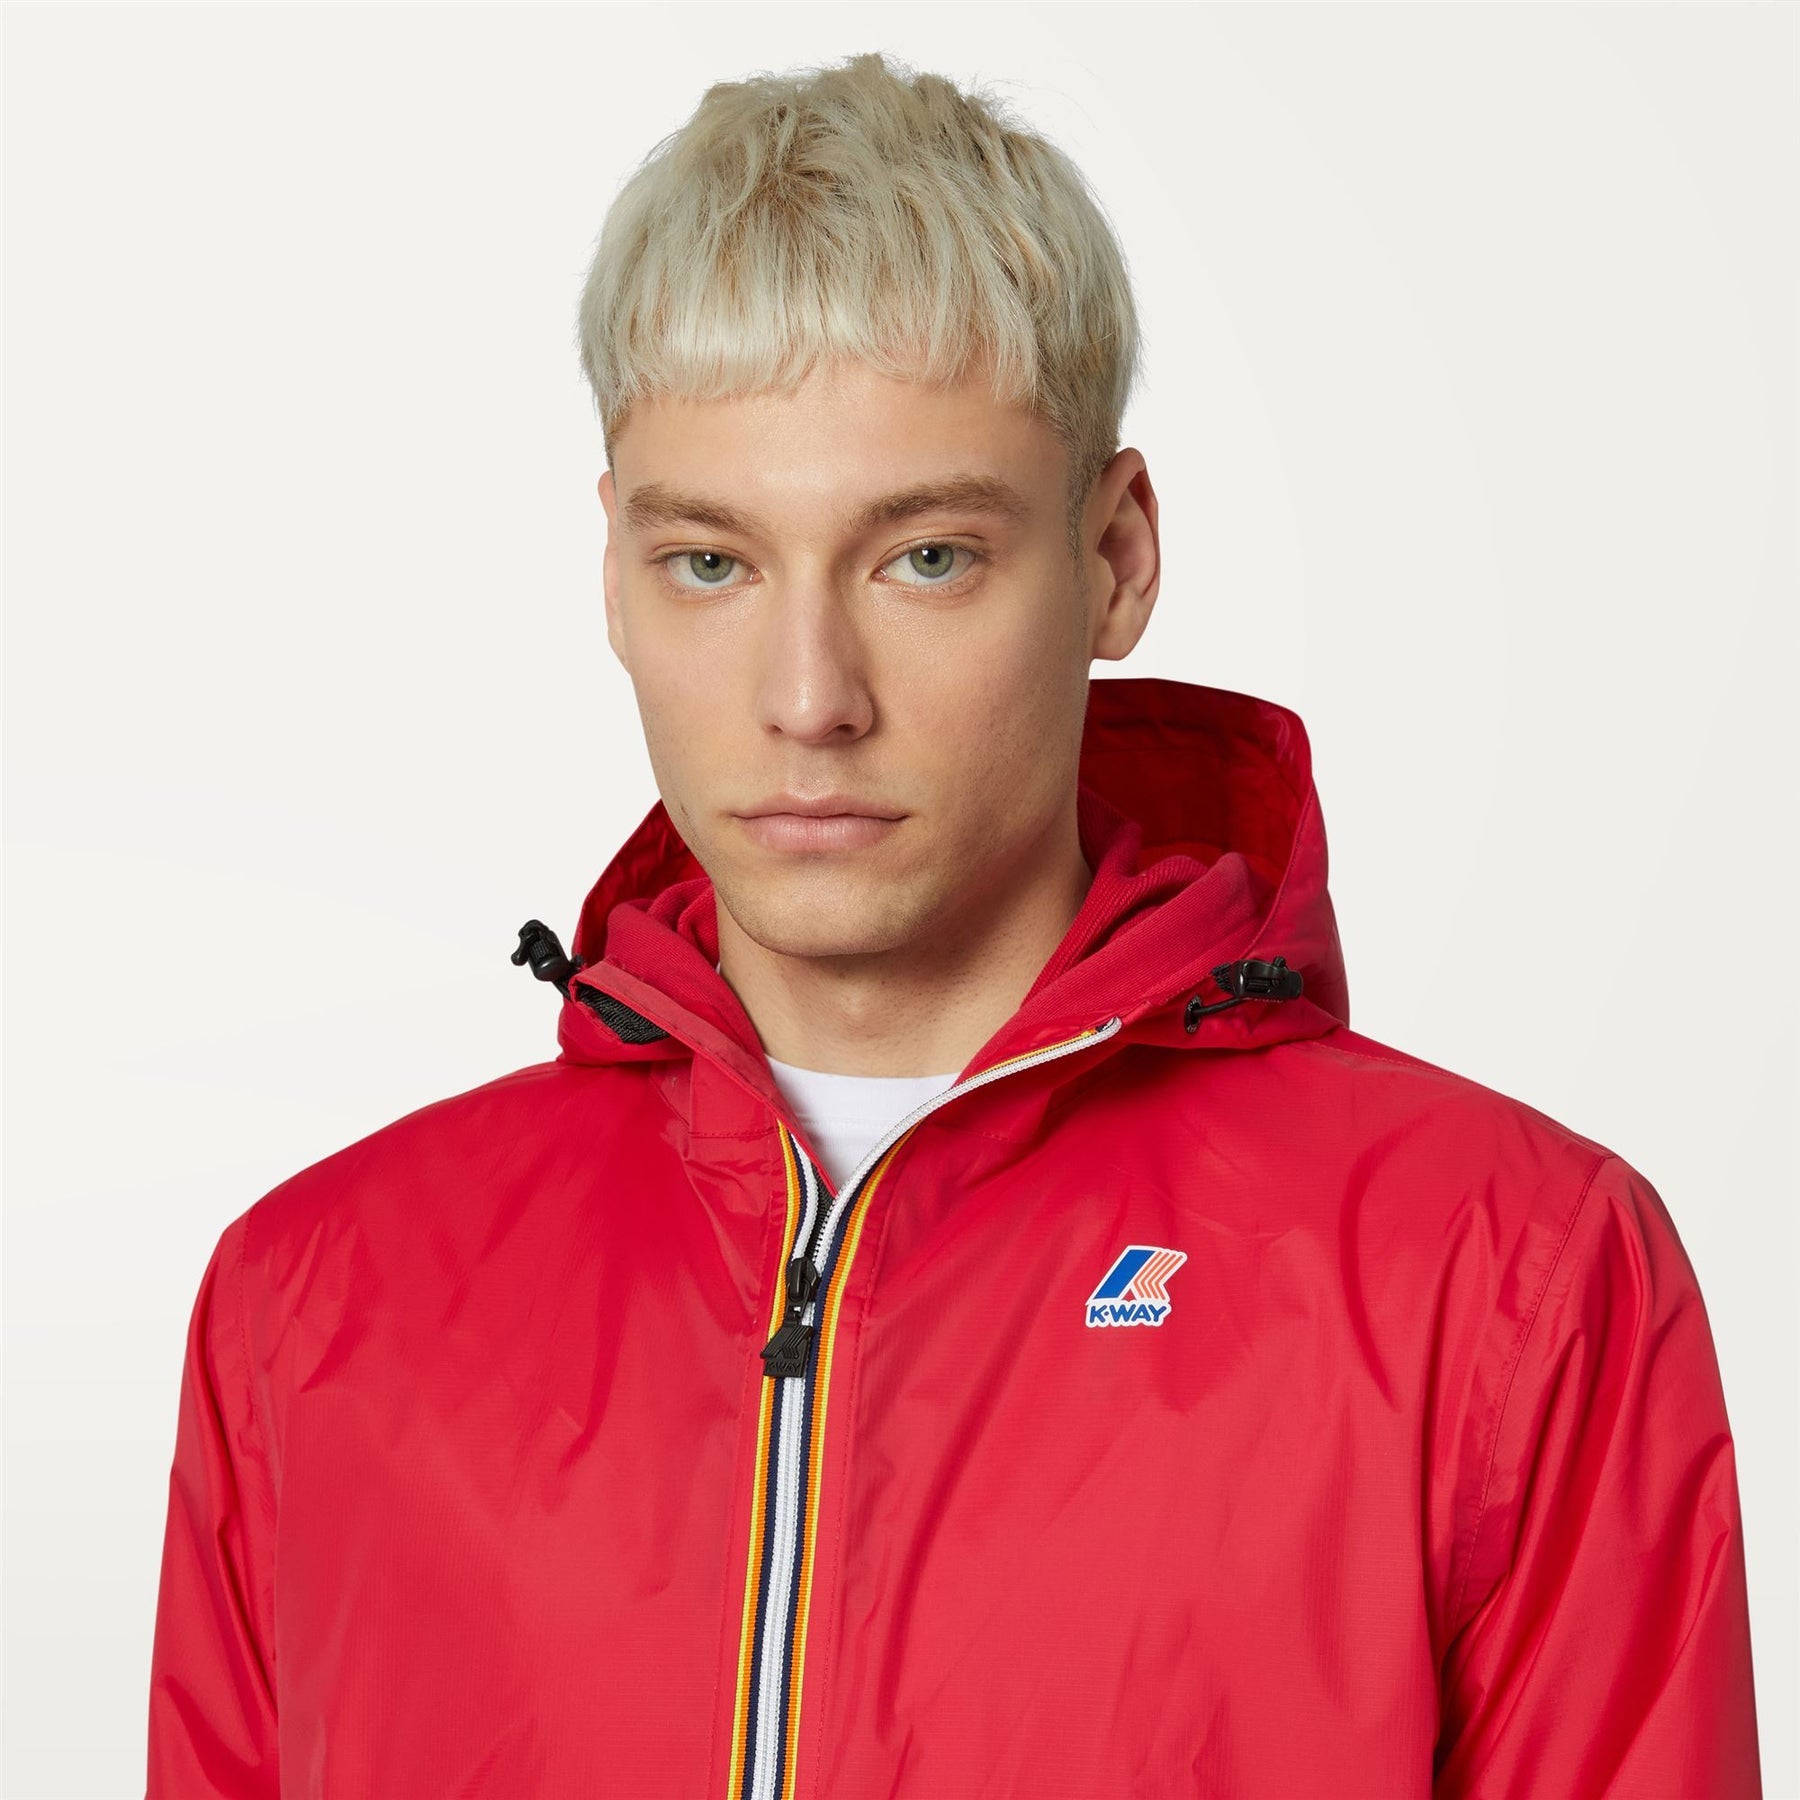 Claude - Unisex Packable Full Zip Waterproof Rain Jacket in Red Berry